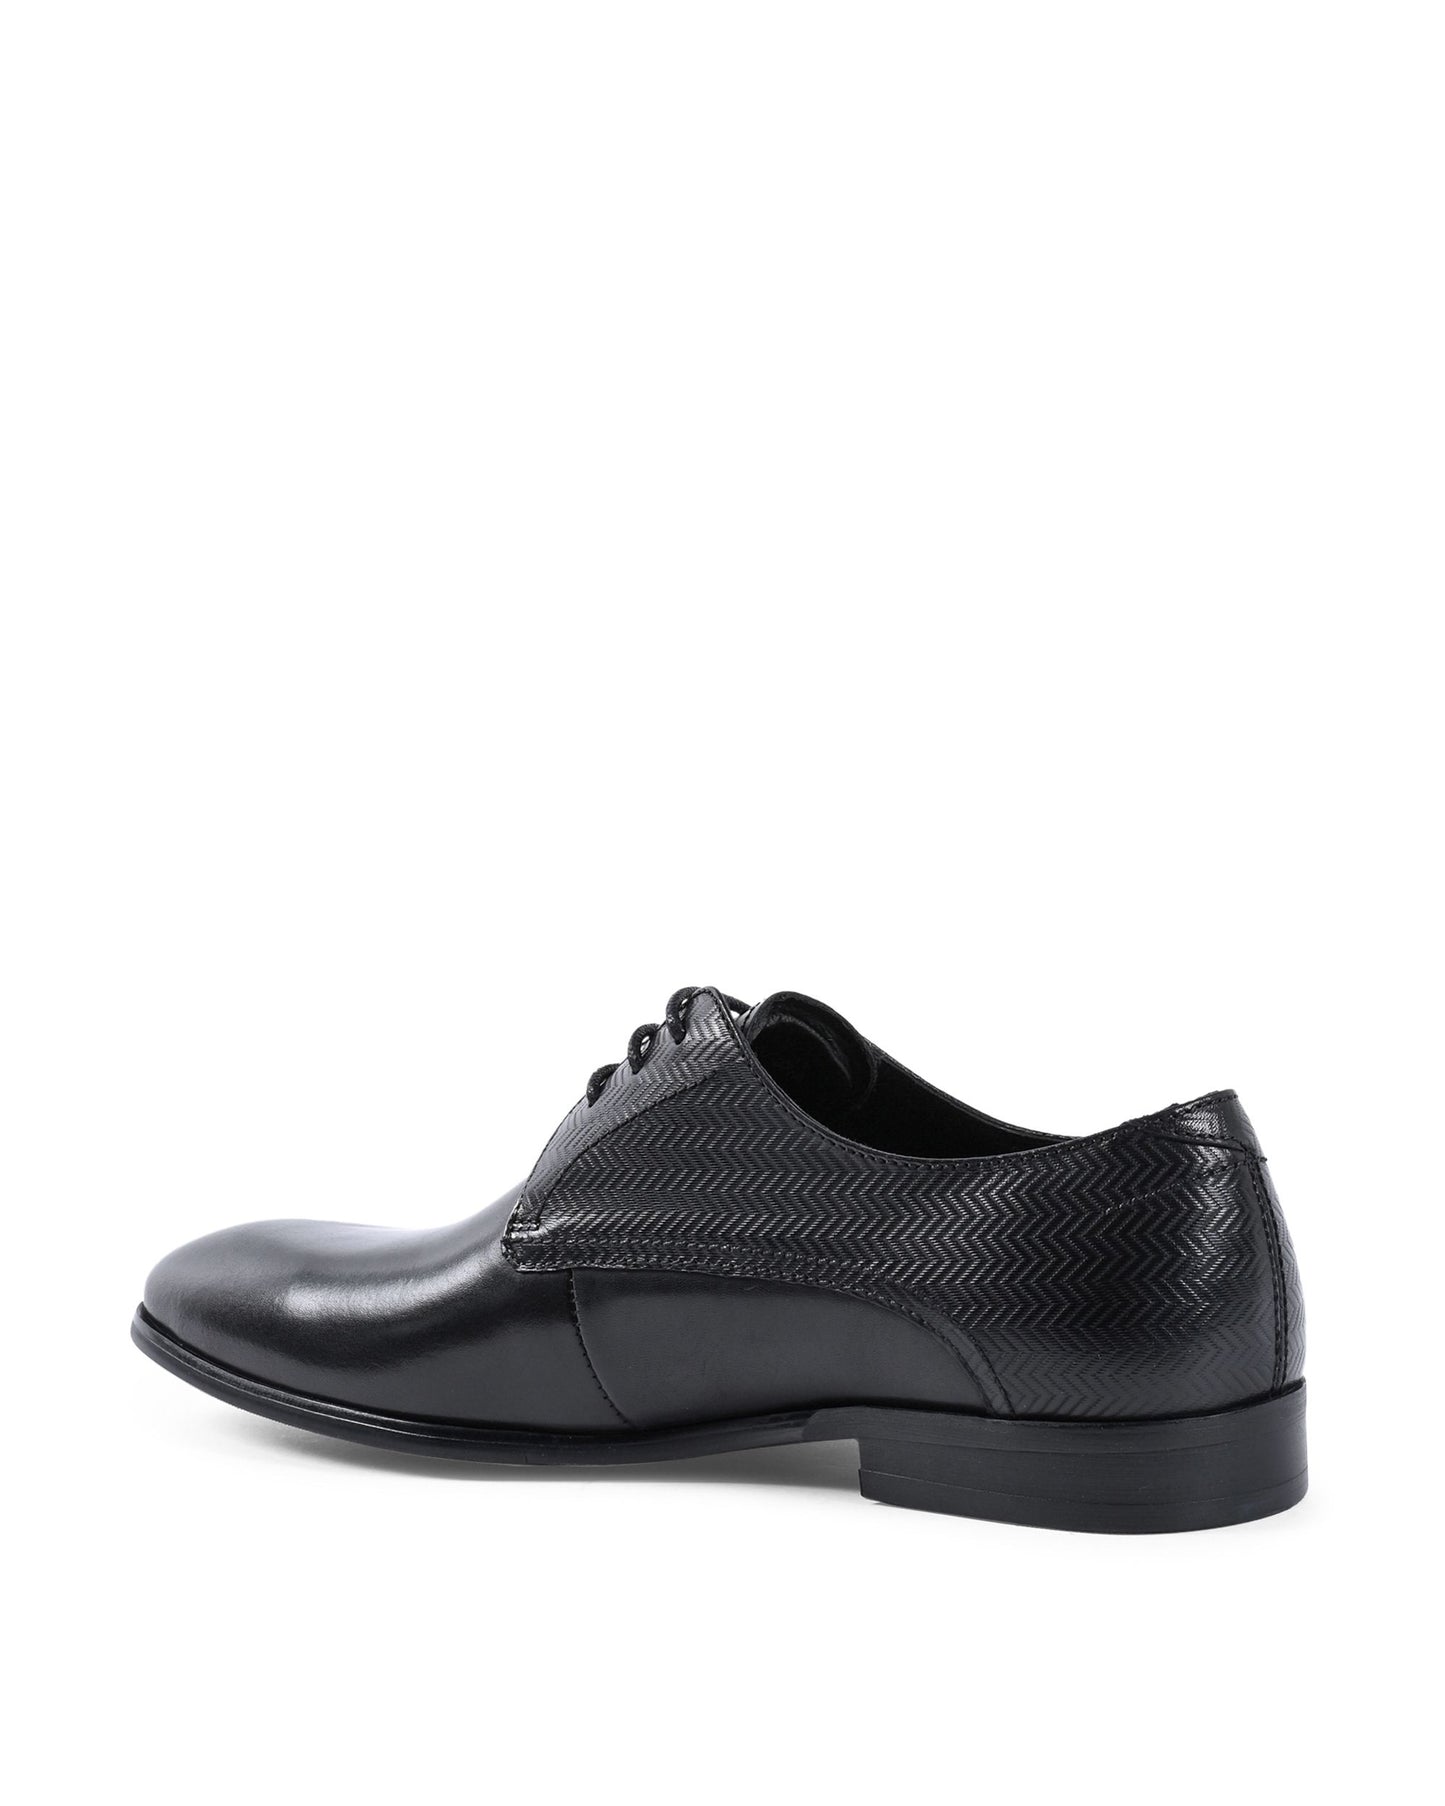 19V69 Italia Mens Lace Up Shoes Black YO 722-1-37 A BLACK